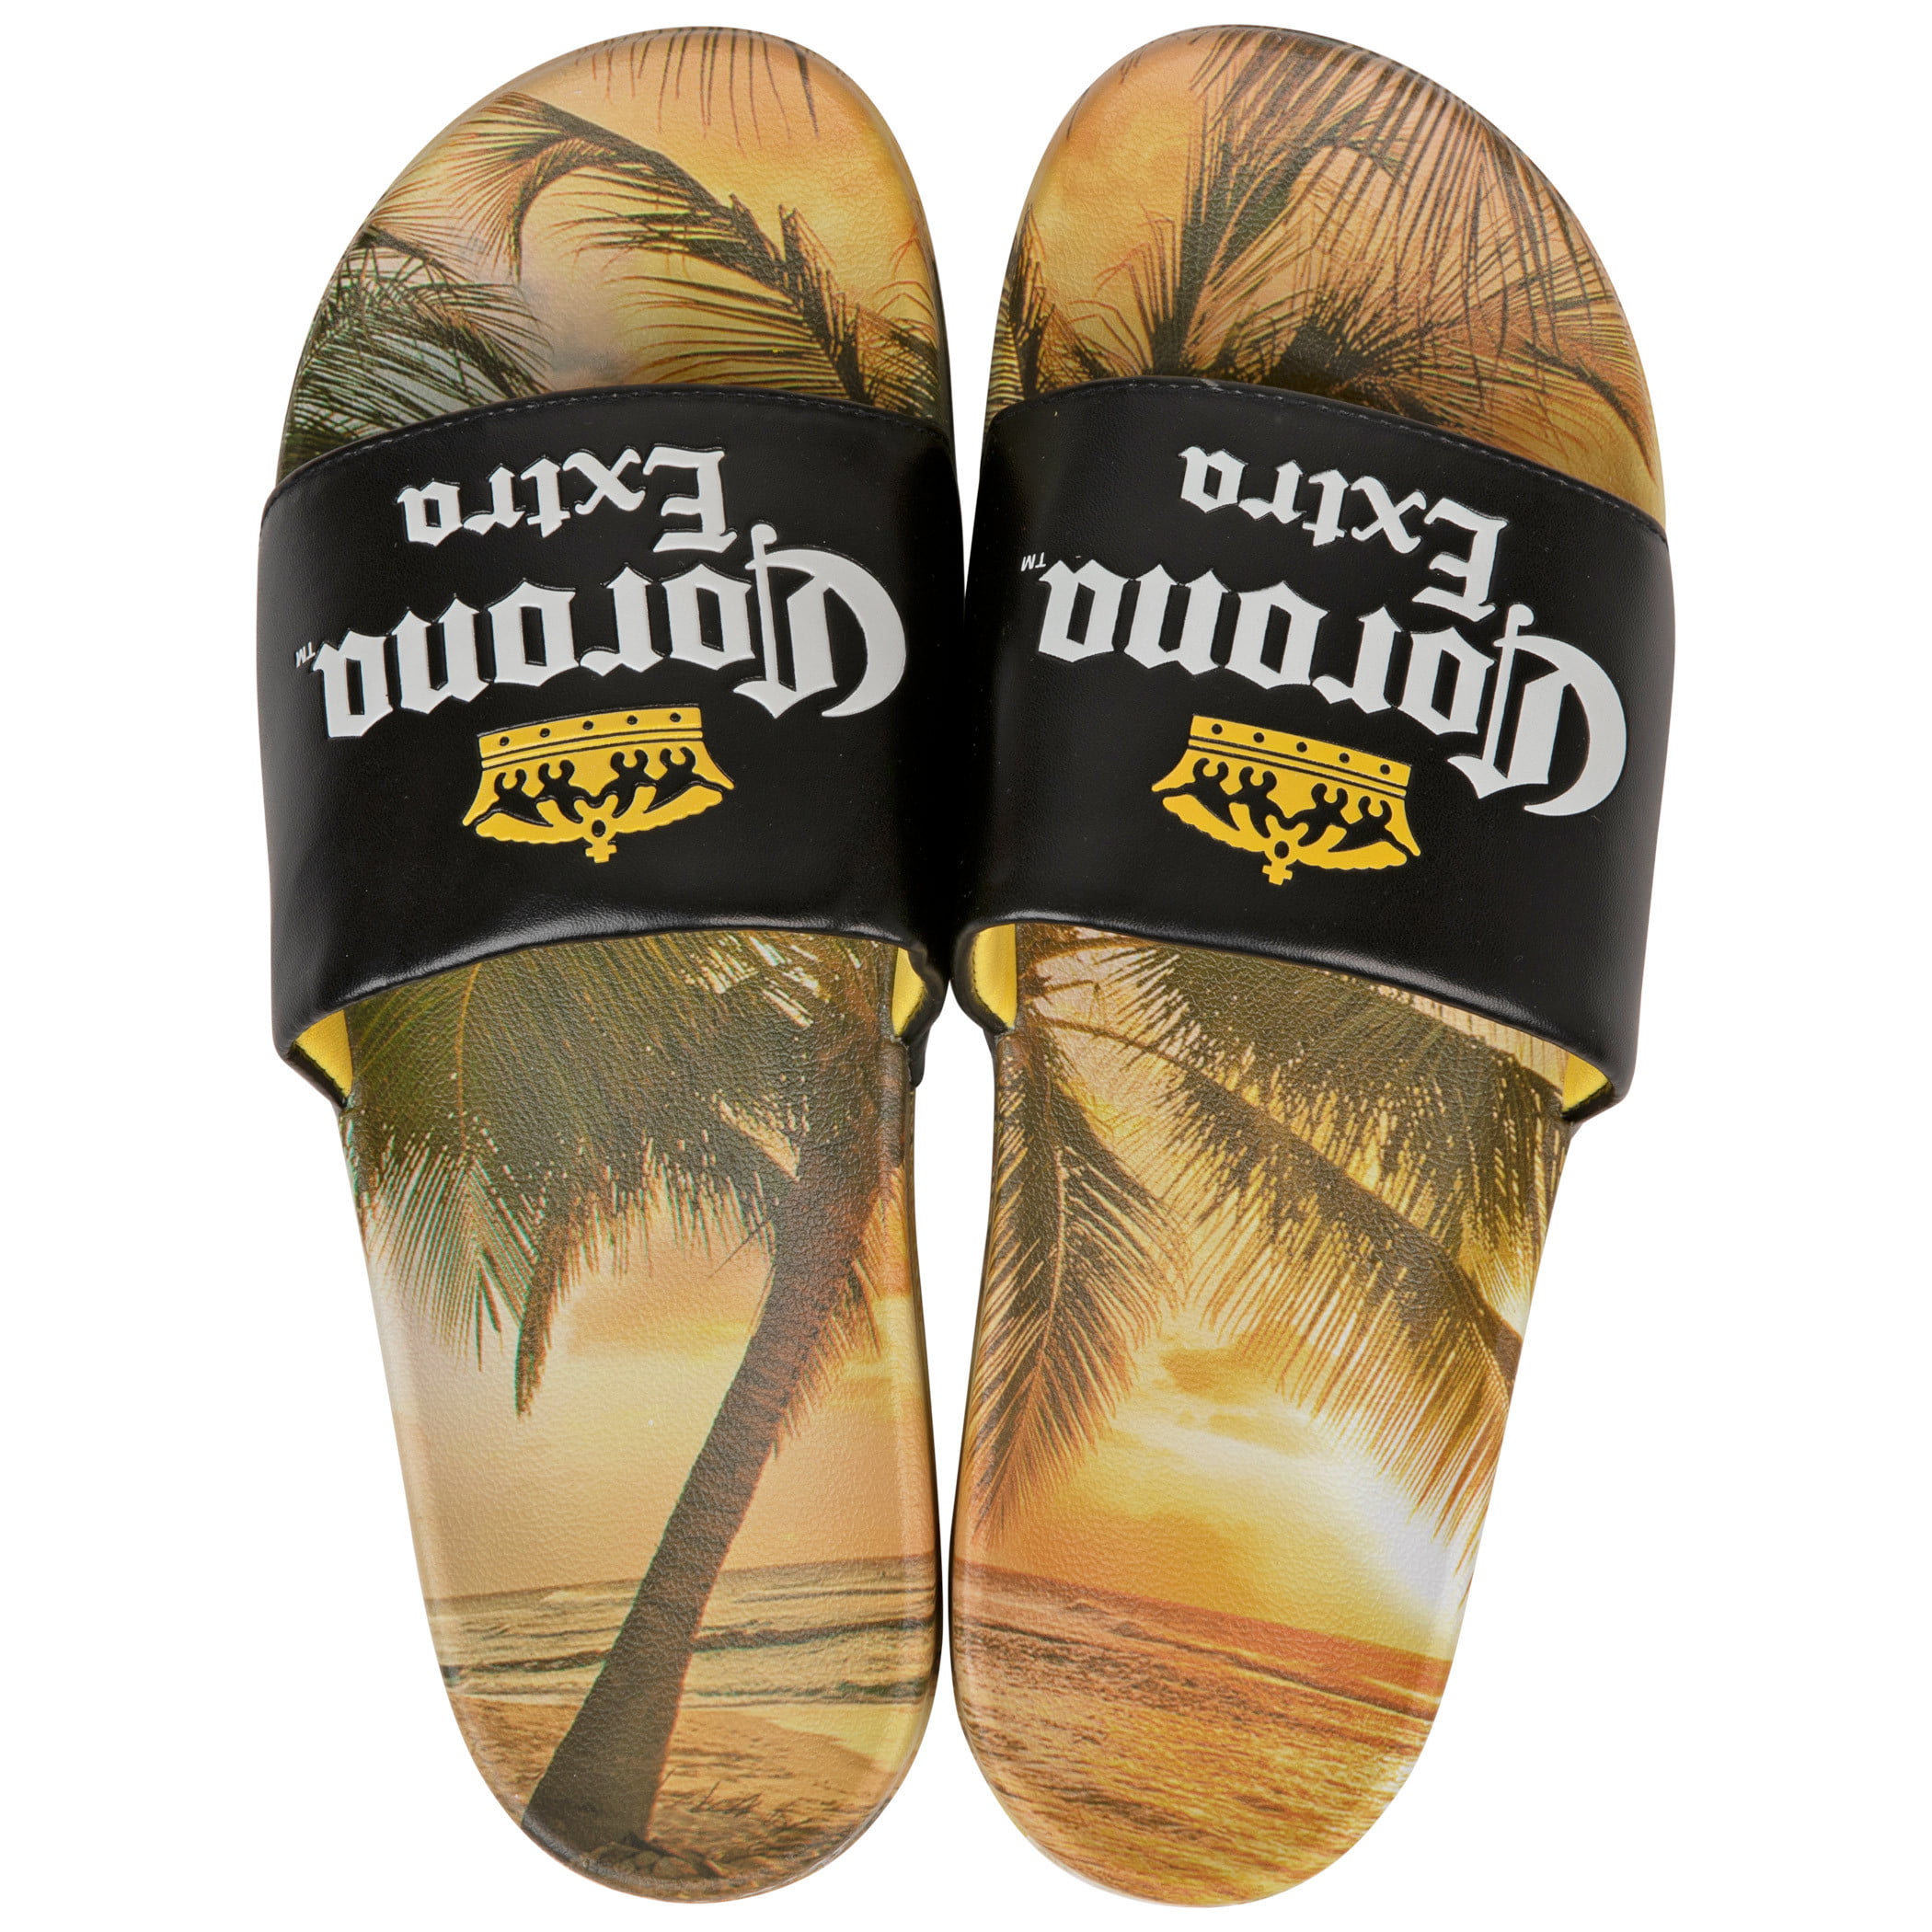 Corona Beer Bottle Opener Summer Beach Party Favors Sandal/Flip Flop/Ball/Cooler 